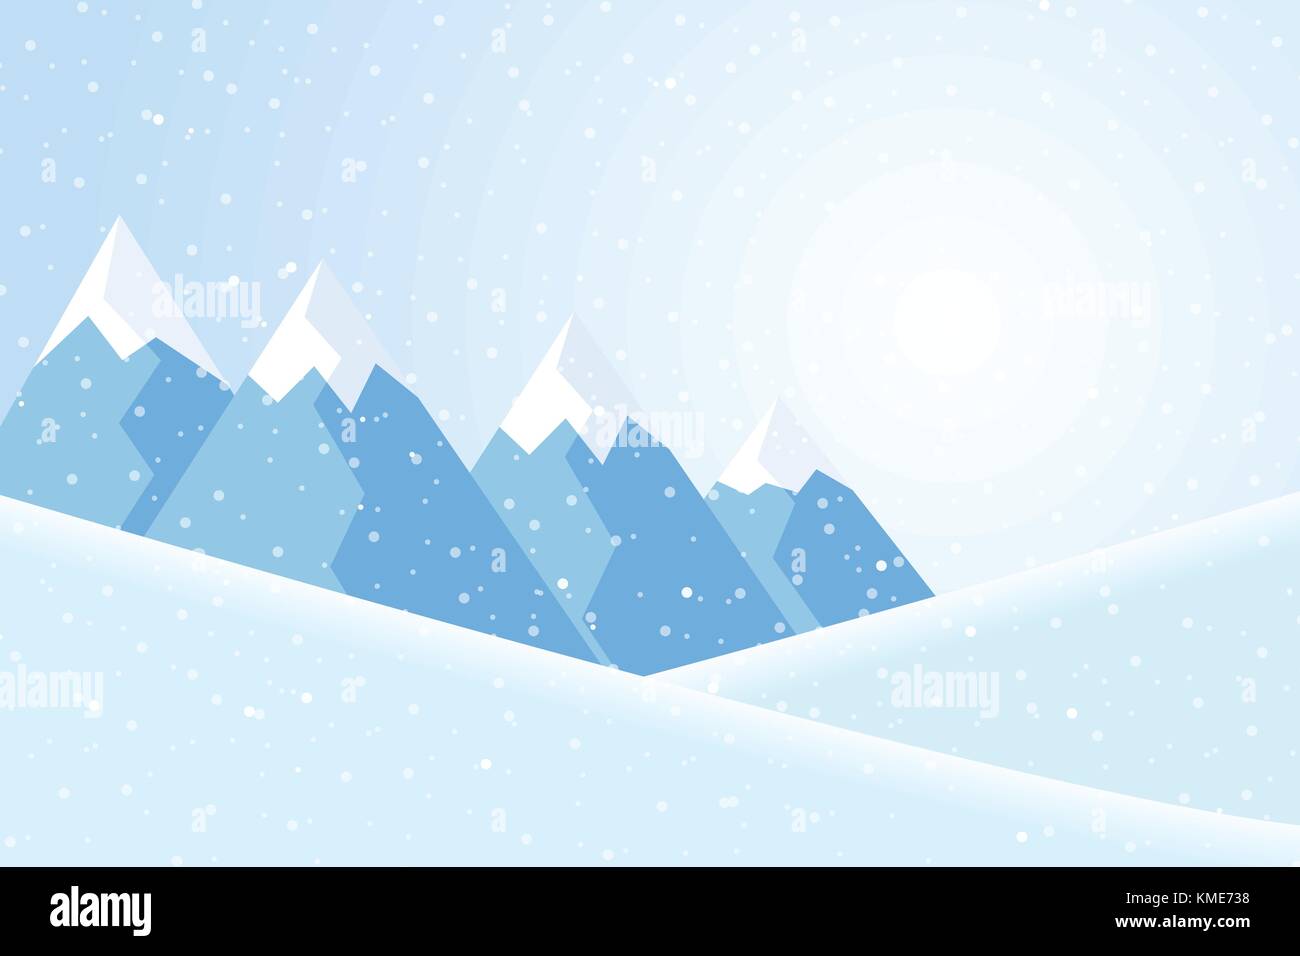 Snow mountain cartoon design hi-res stock photography and images - Alamy